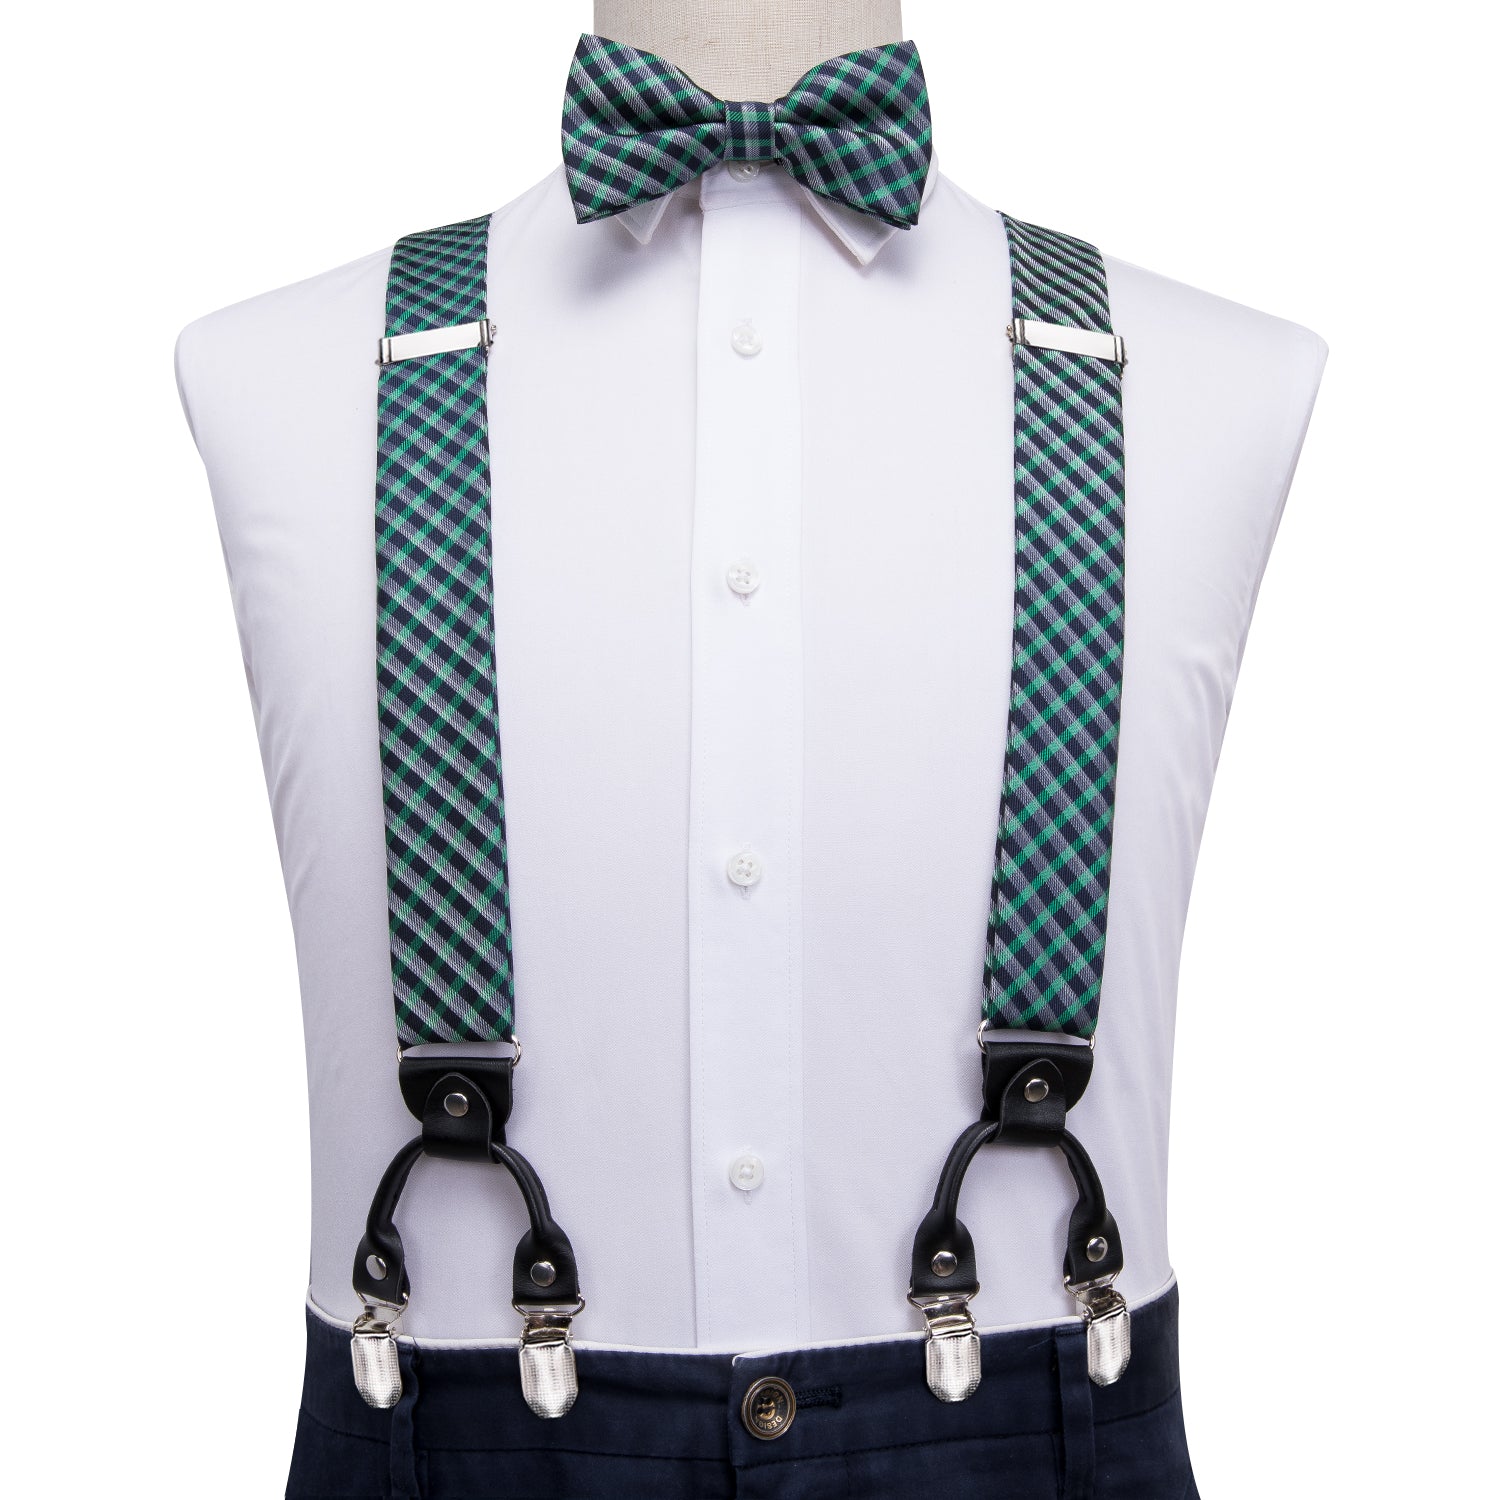 Green and Black Plaid Suspender Bowtie Pocket Square Cufflinks Set